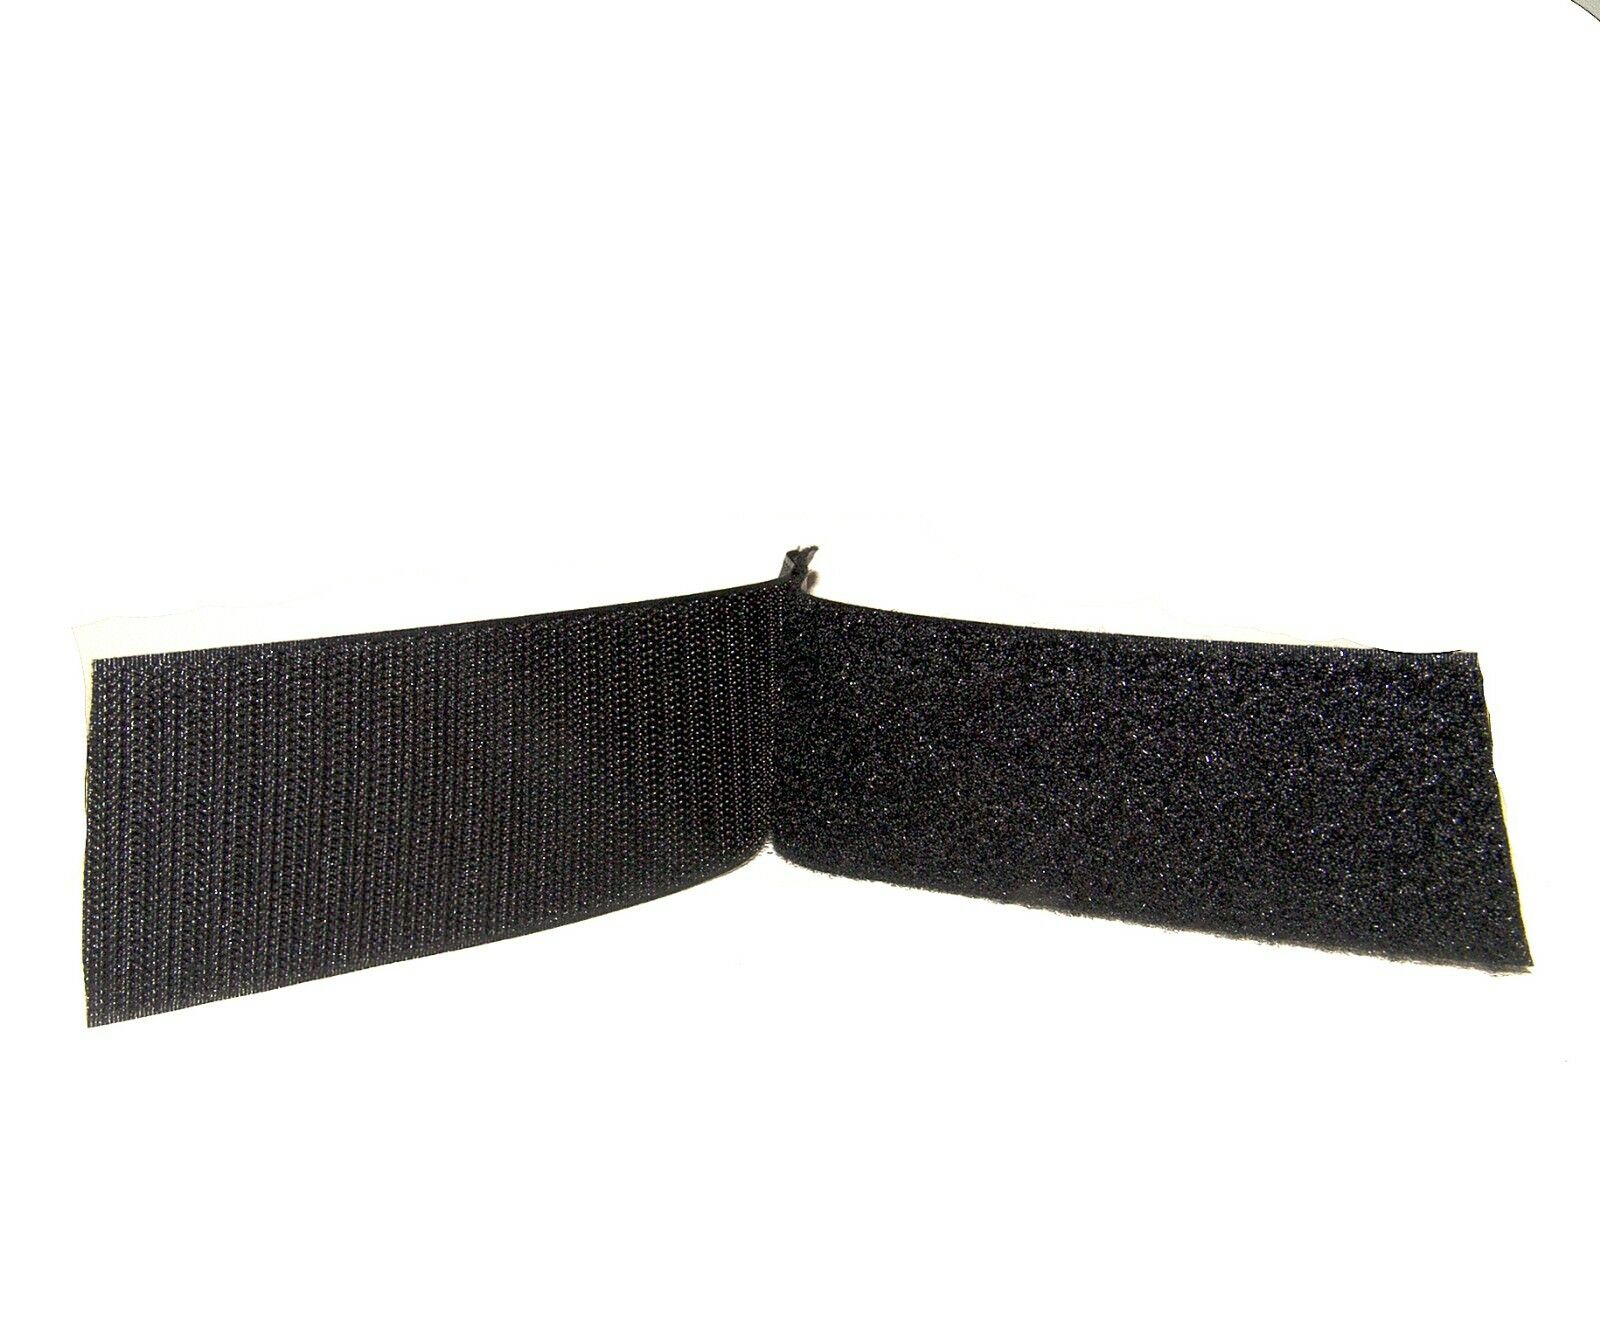 Velcro 2" Inch, Hook & Pile Tape, Black, Sew-on Type, 12 Inch Lengths Uncut